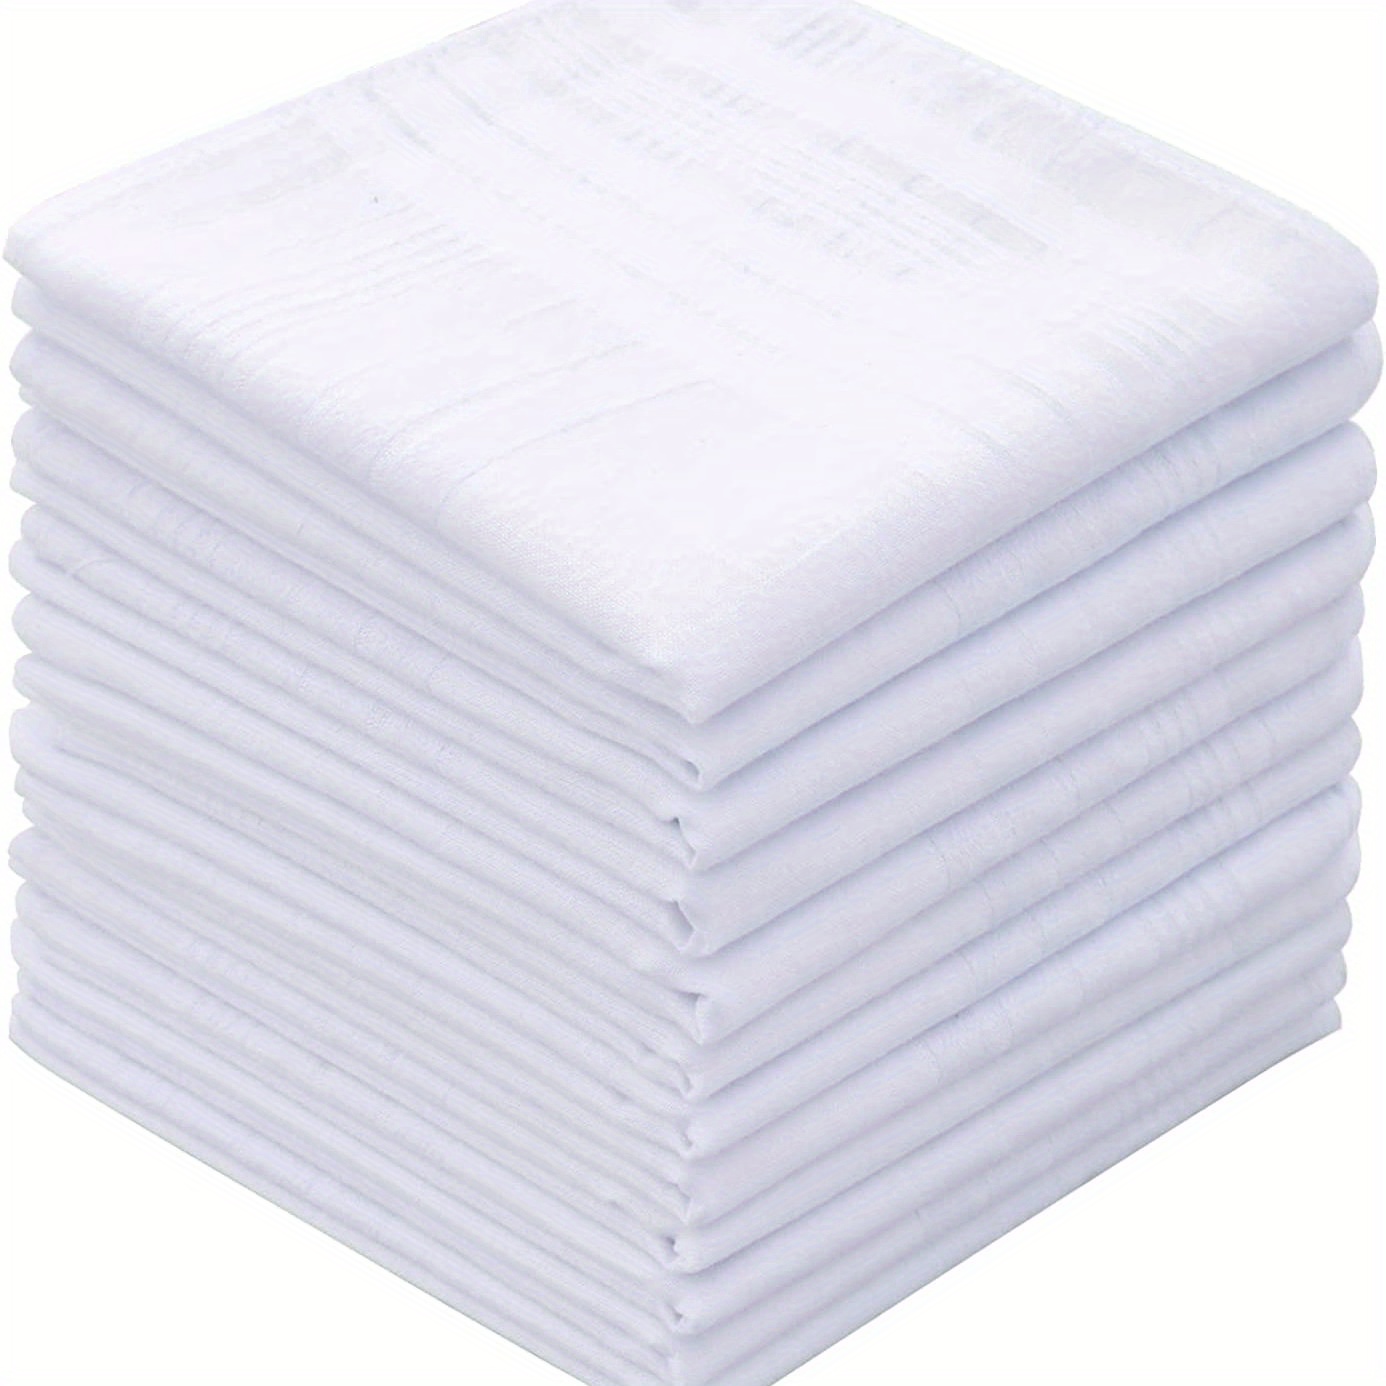 12pcs set 17 white cotton square scarves simple thin breathable handkerchiefs breathable sweating handkerchiefs plain casual hankies accessories